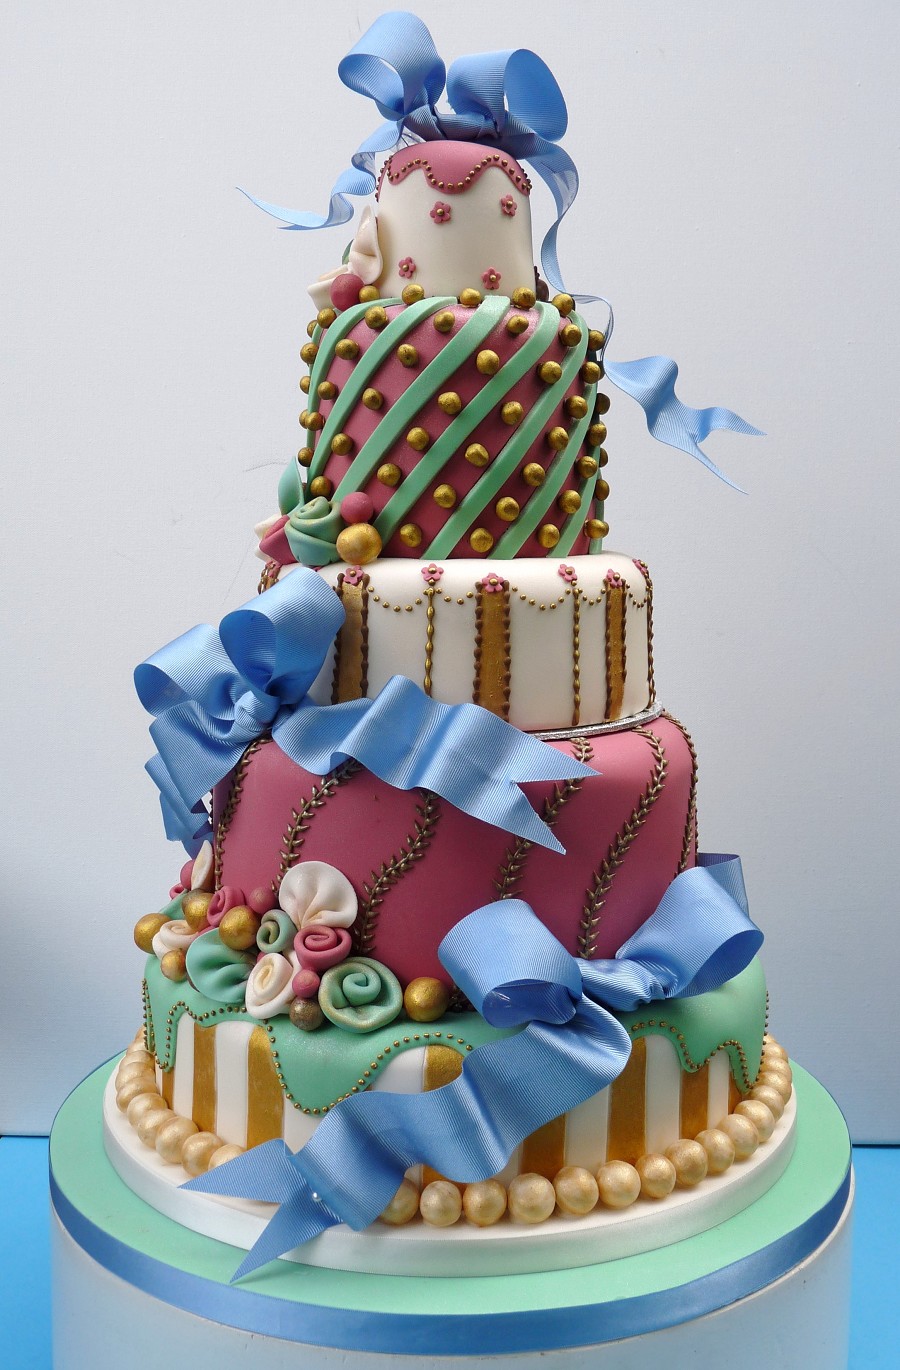 Awesome Wedding Cakes - Best of Cake